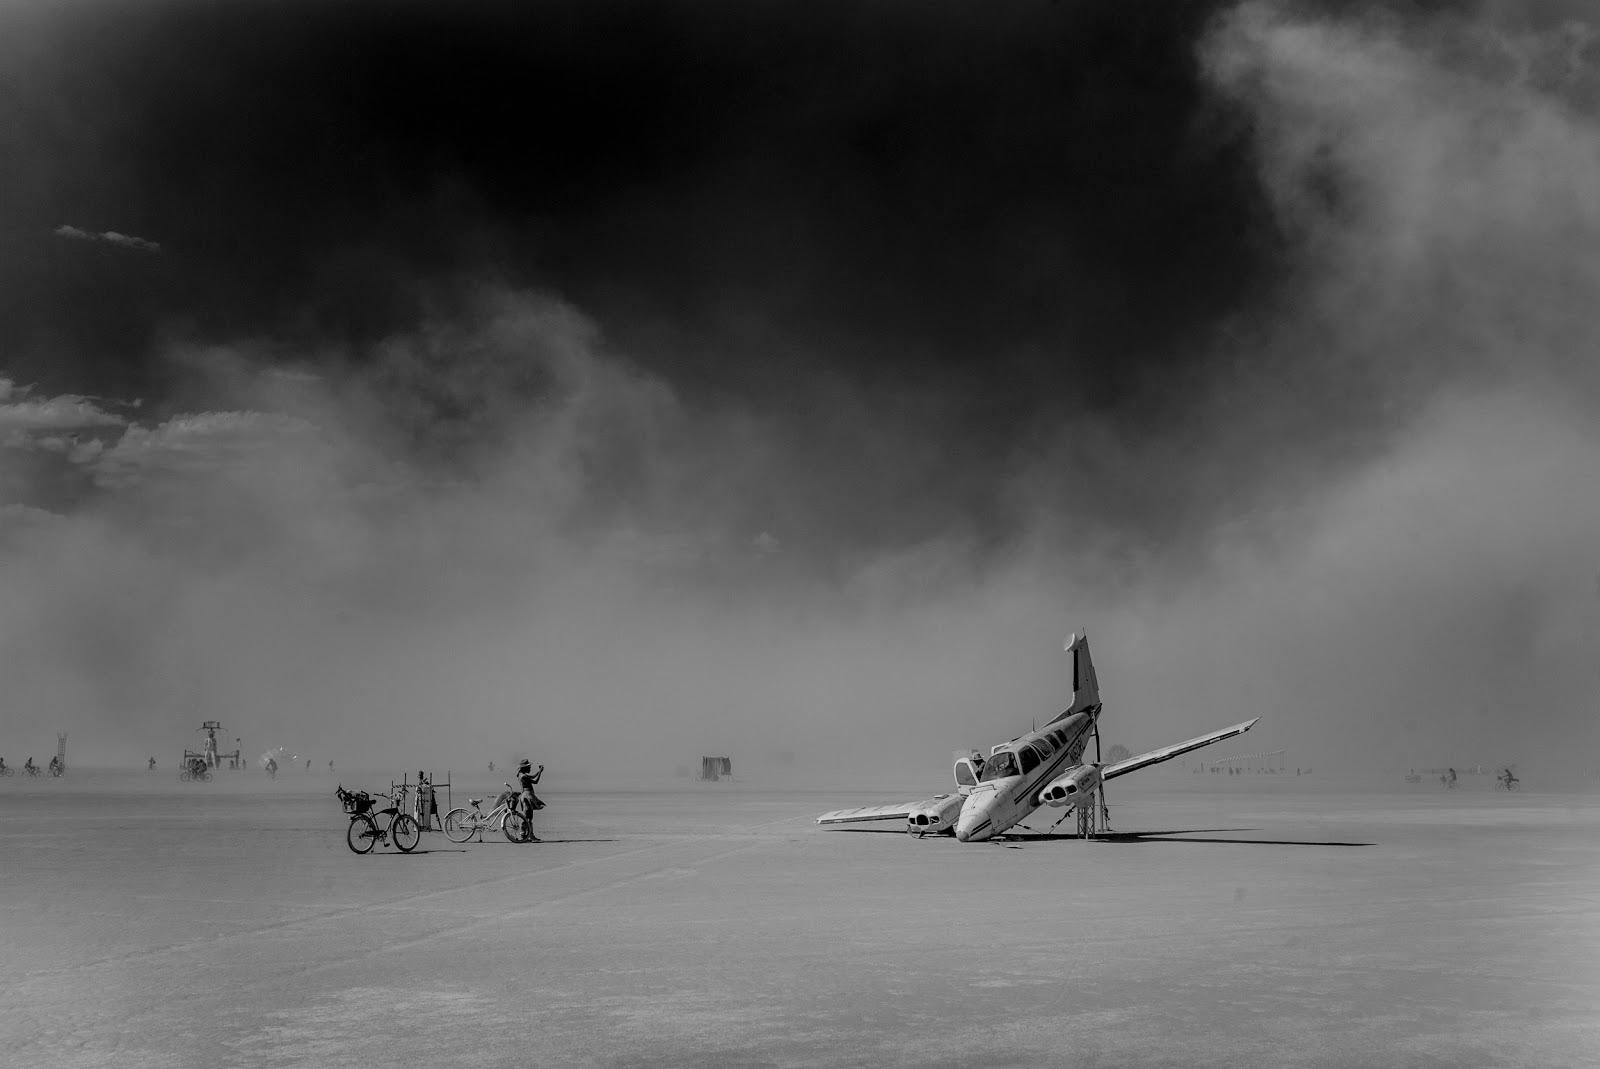 Plane Crash at Black Rock, 21st Century, Landscape Photography, Contemporary